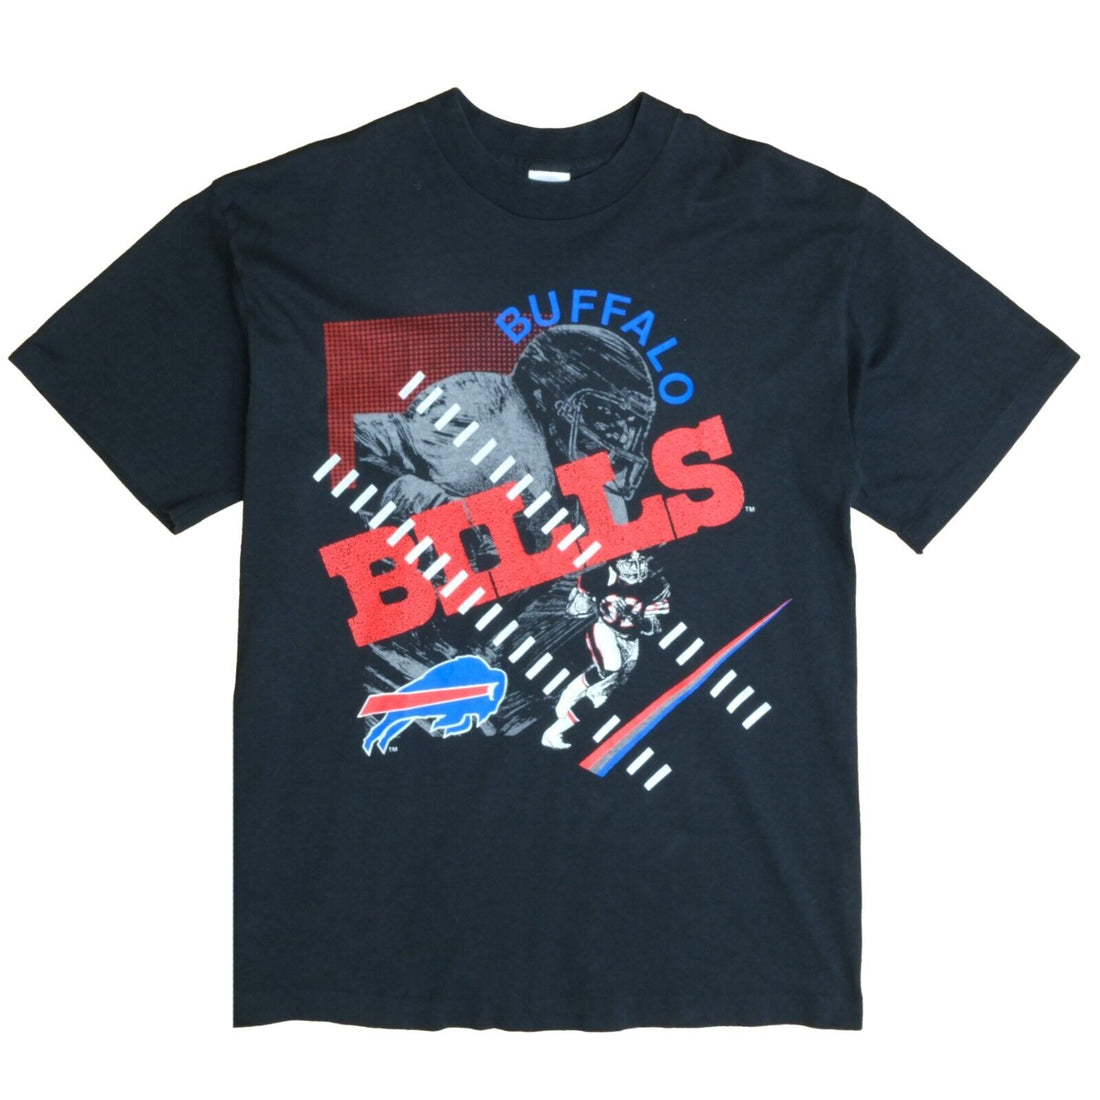 Vintage Buffalo Bills Trench T-Shirt Size Large Black 90s NFL